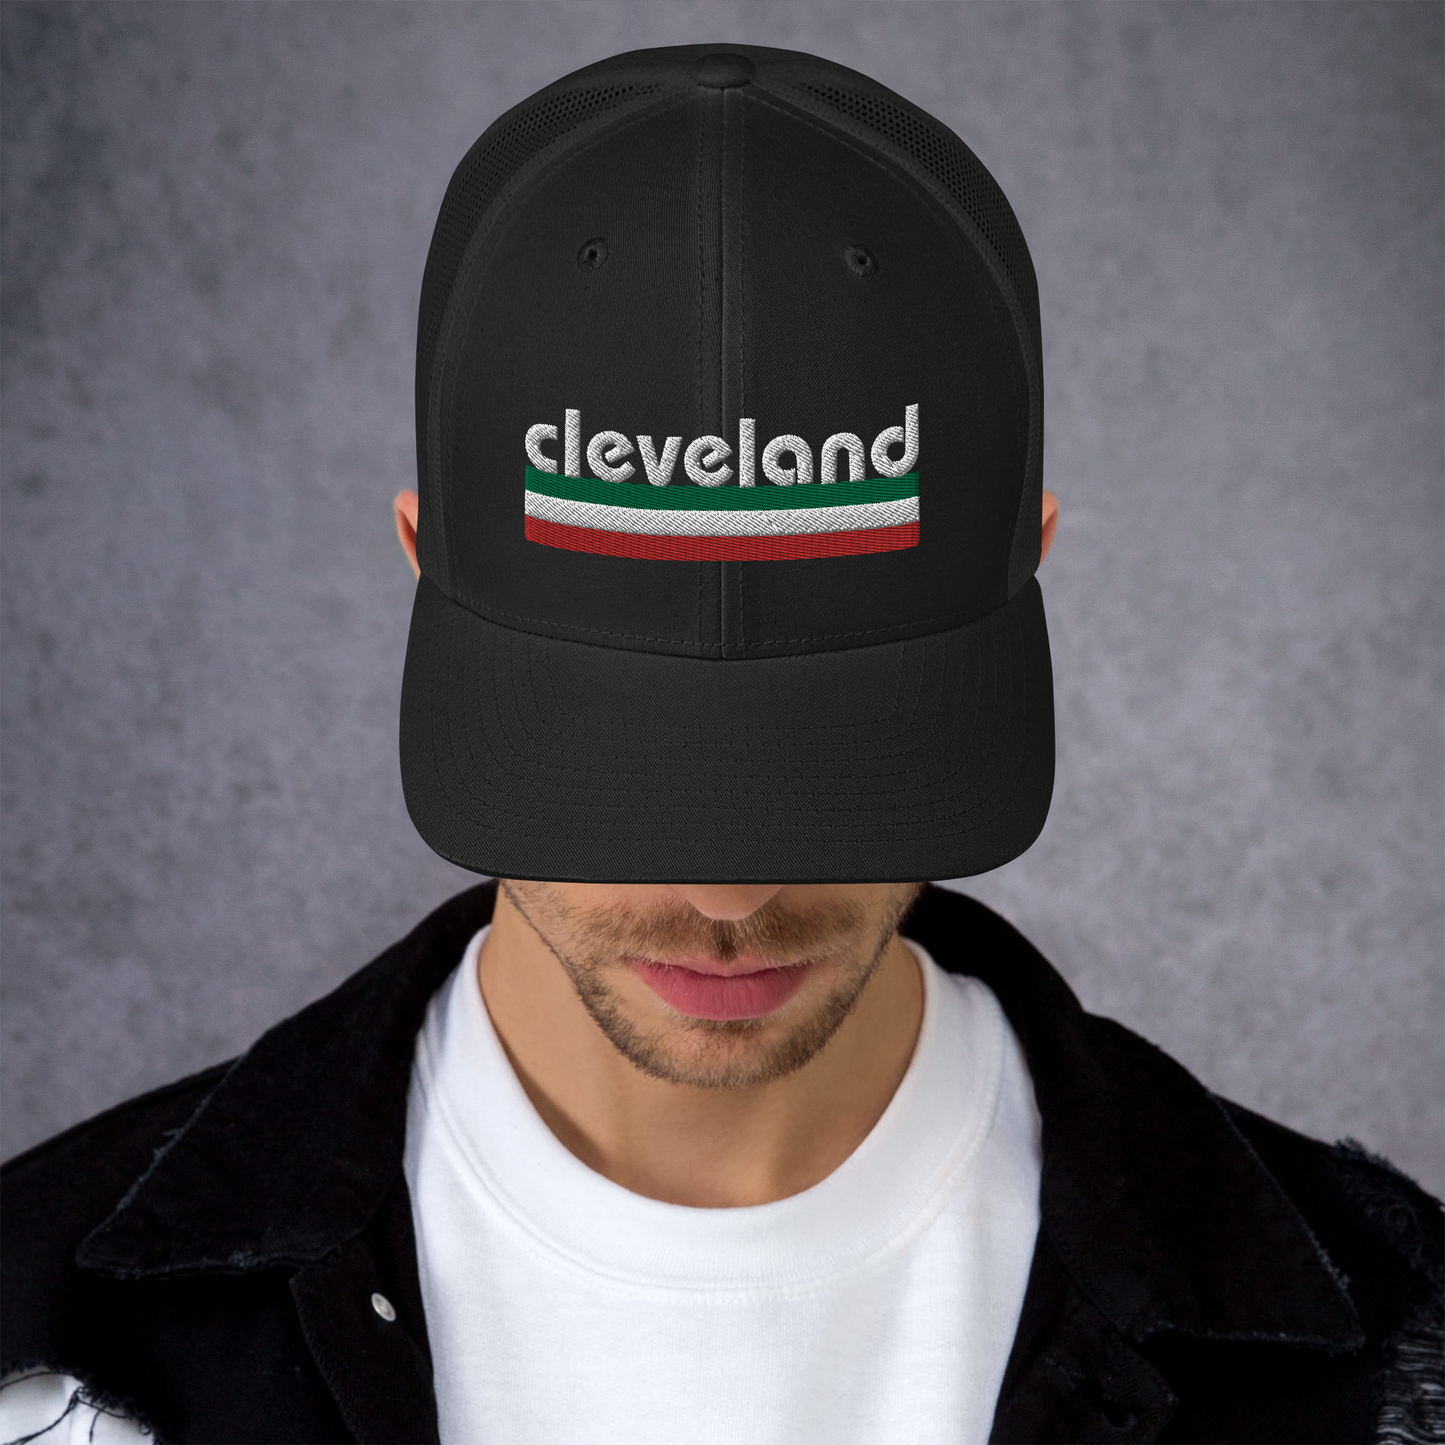 Cleveland Italian Pride Trucker Hat- Stylish Urban Headwear with Italian Flair